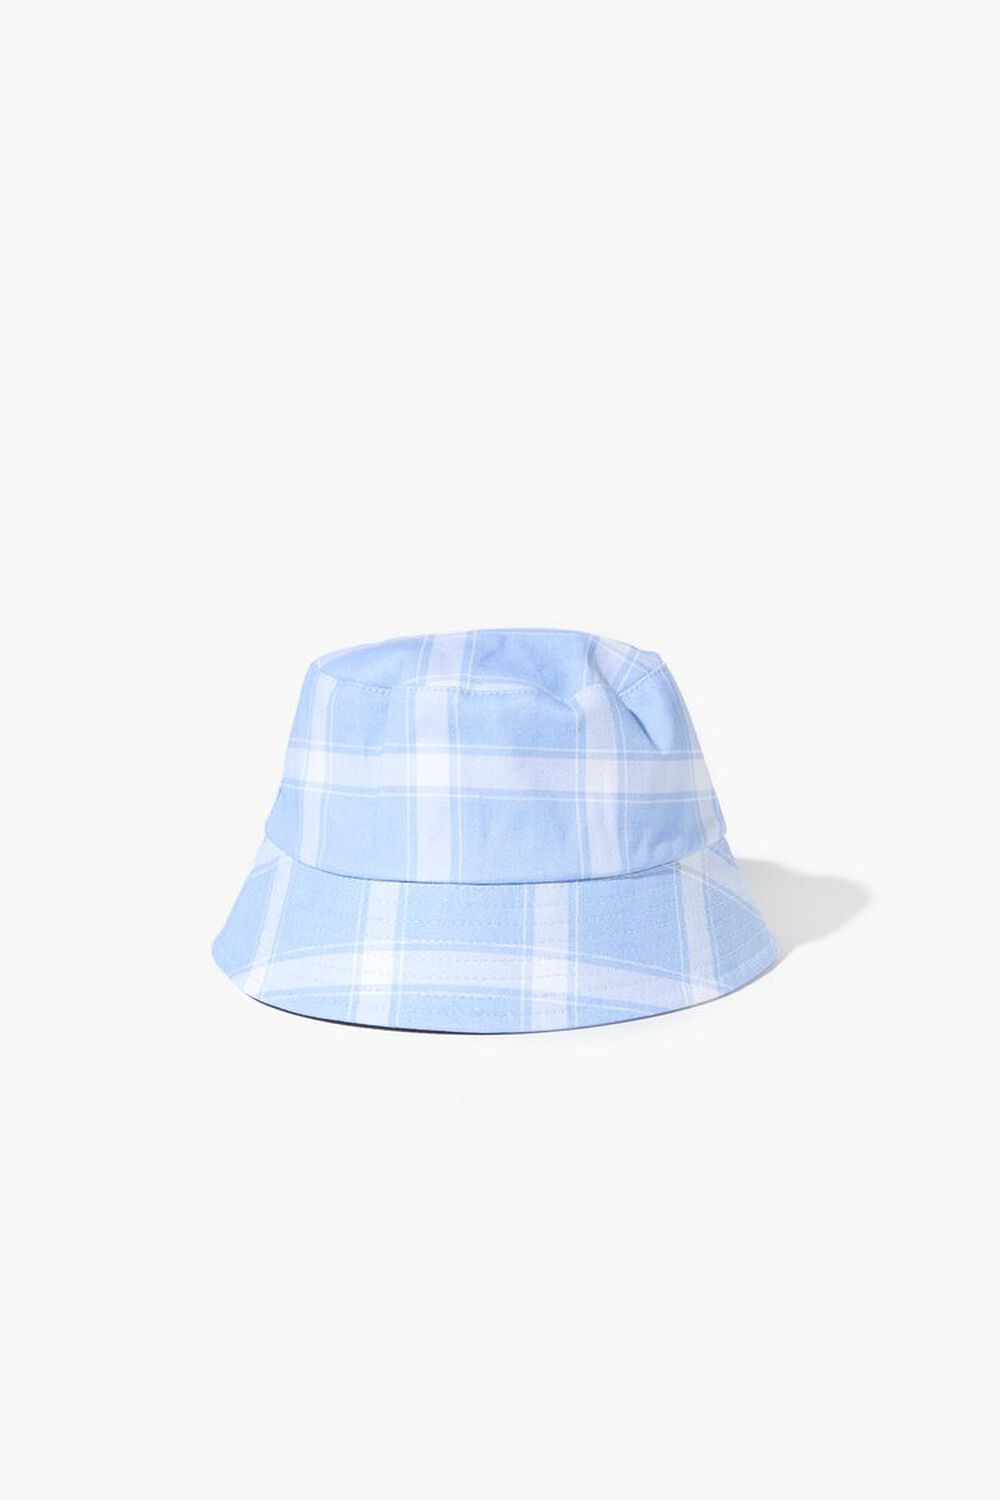 BLUE/WHITE Kids Plaid Bucket Hat (Girls + Boys), image 1